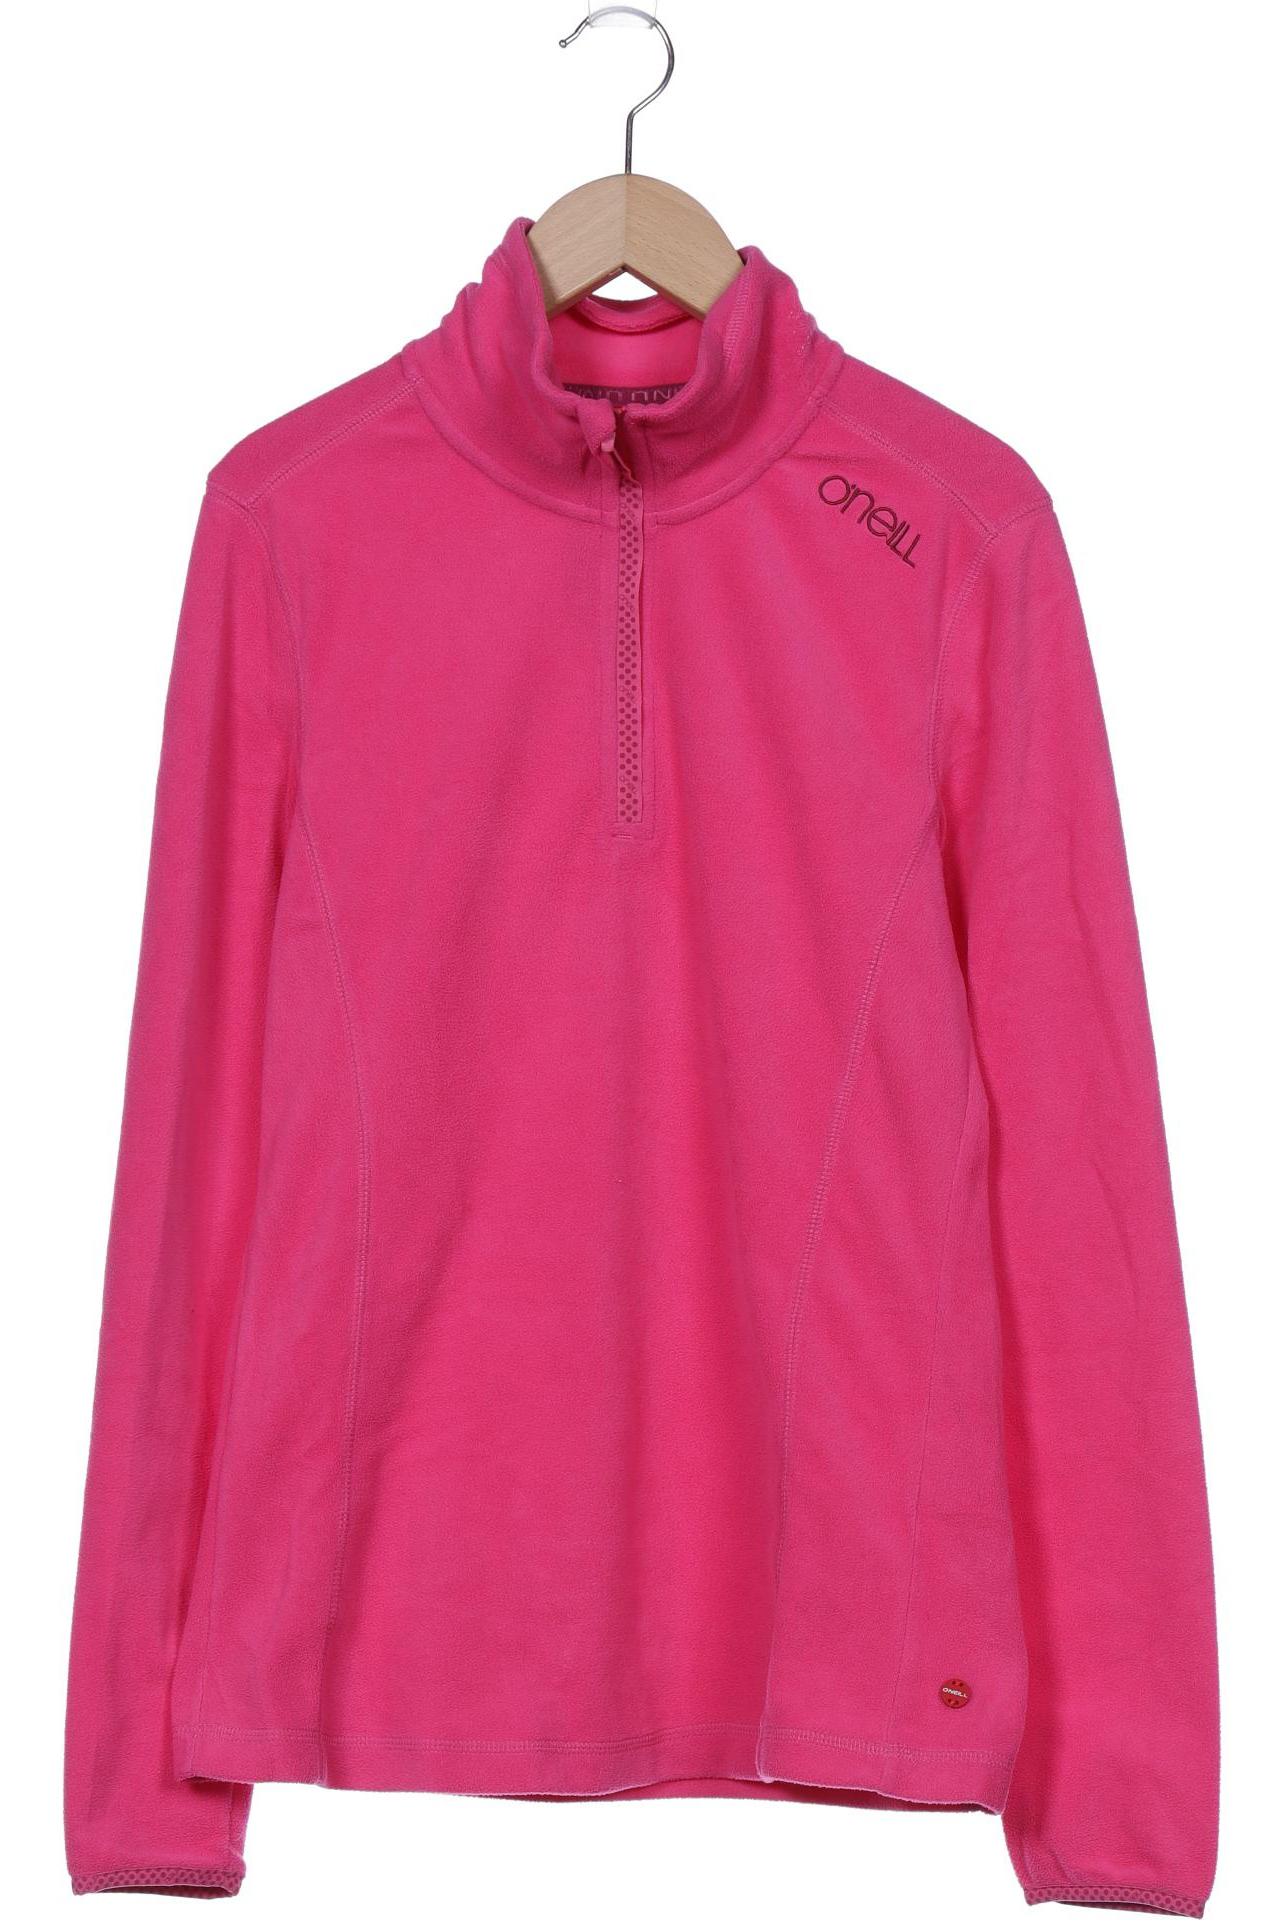 O Neill Damen Sweatshirt, pink von O Neill